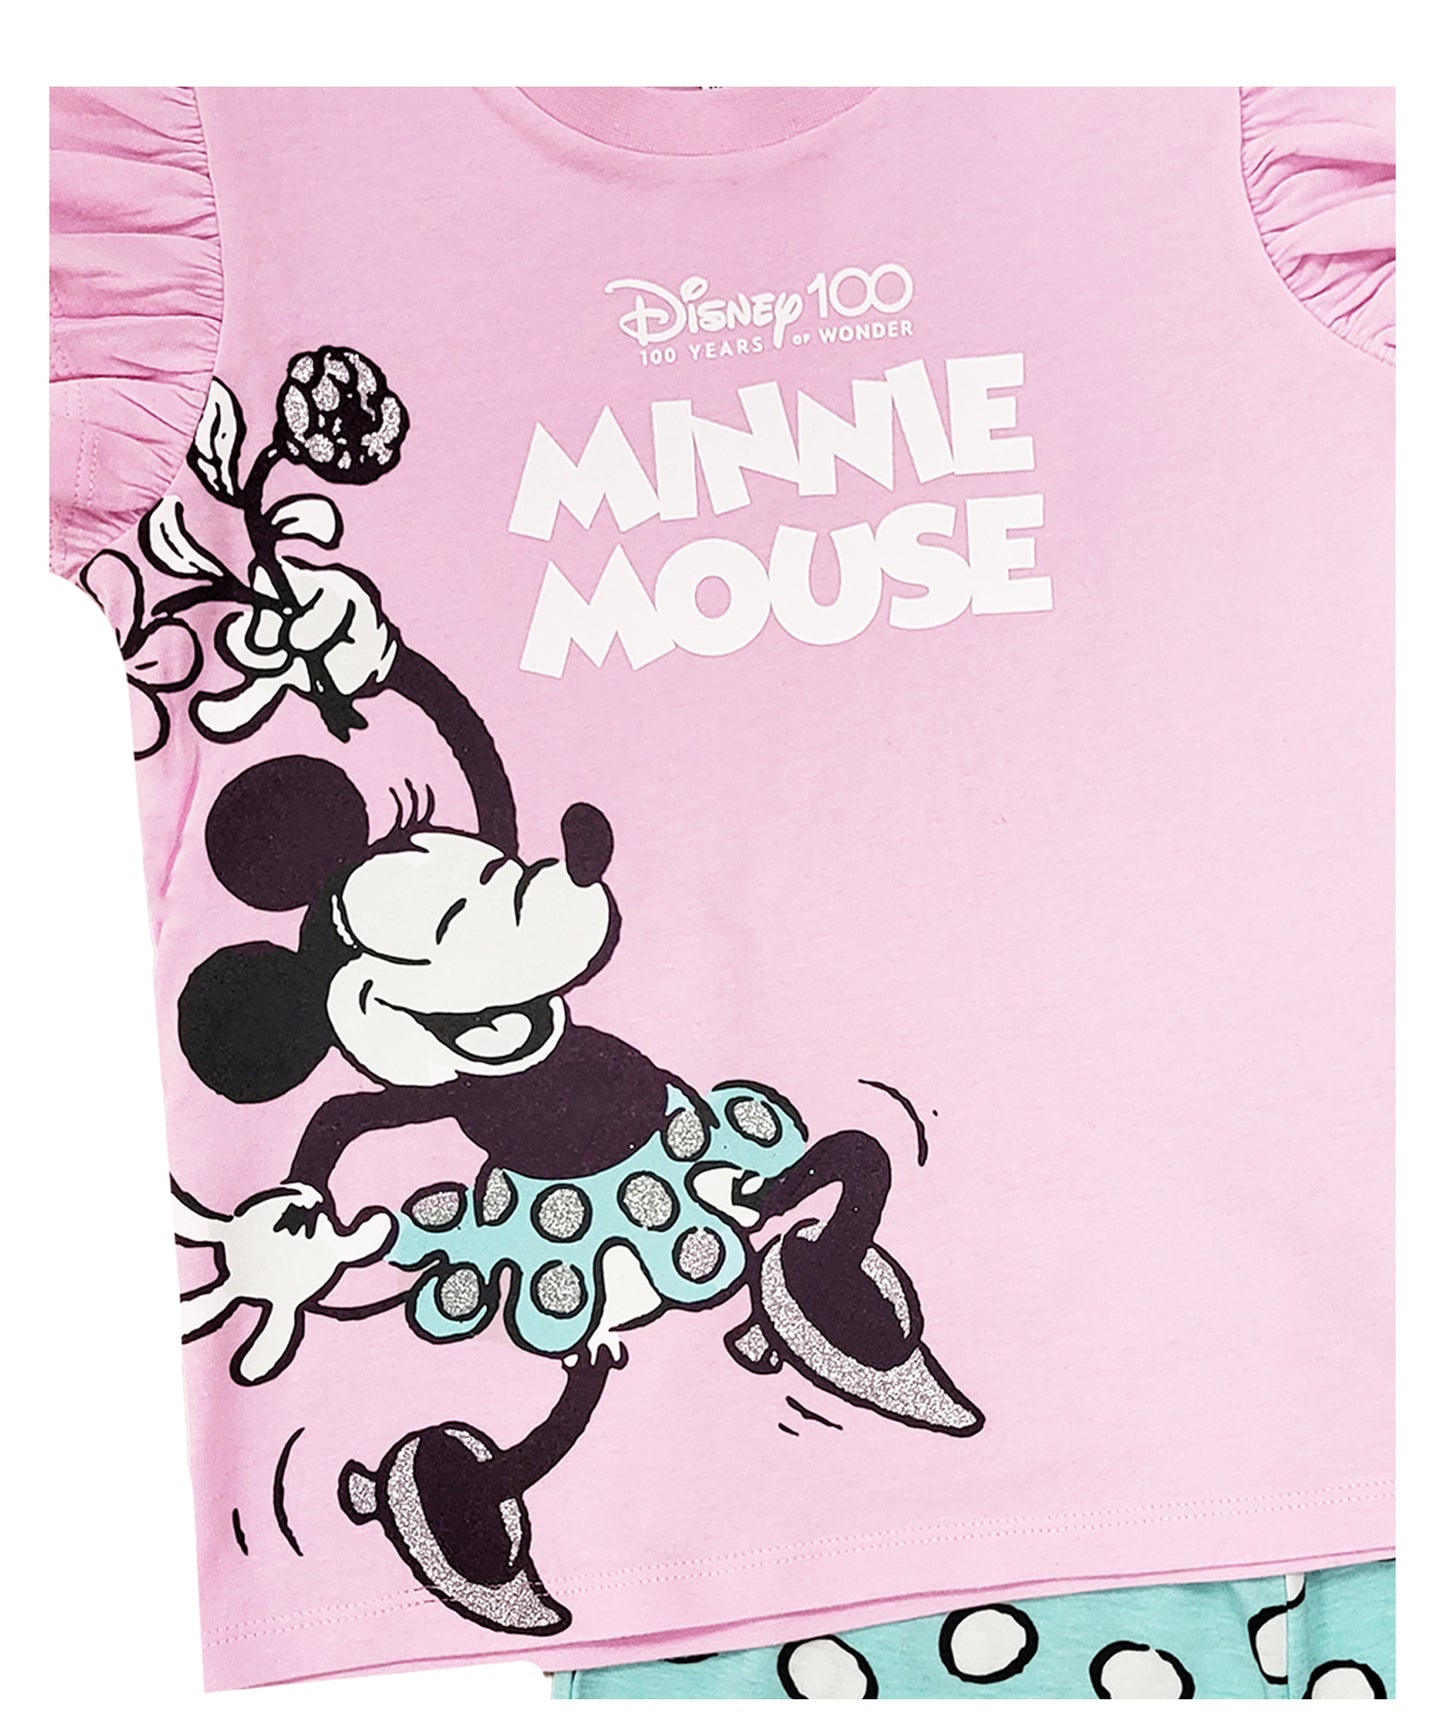 Girls Disney Minnie Mouse Short Pyjamas